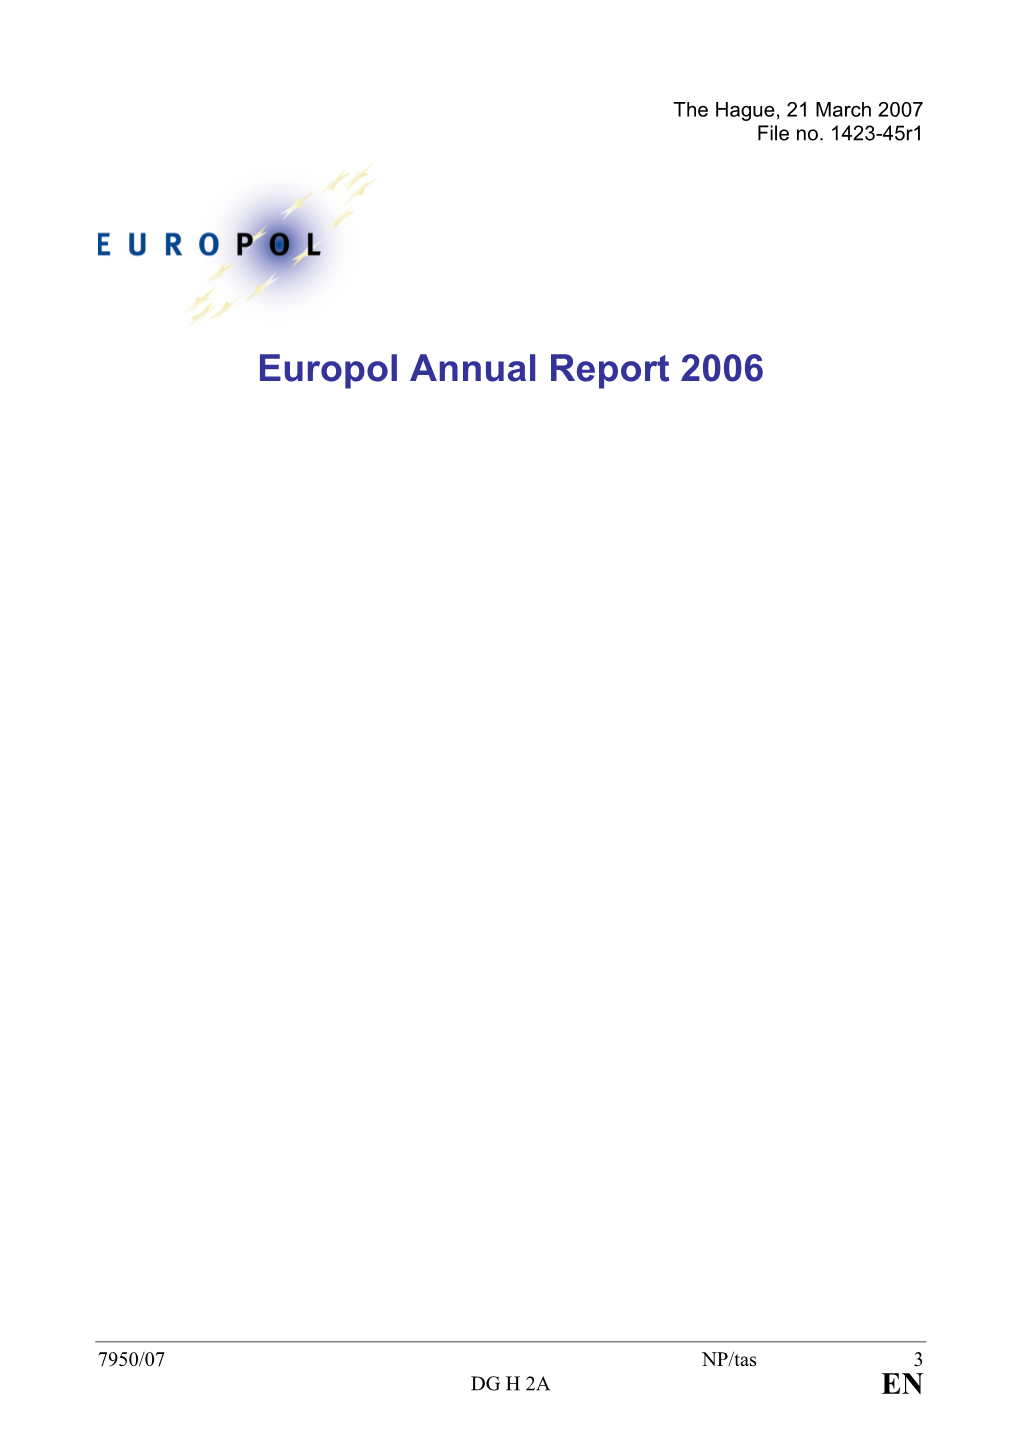 Europol Annual Report 2006